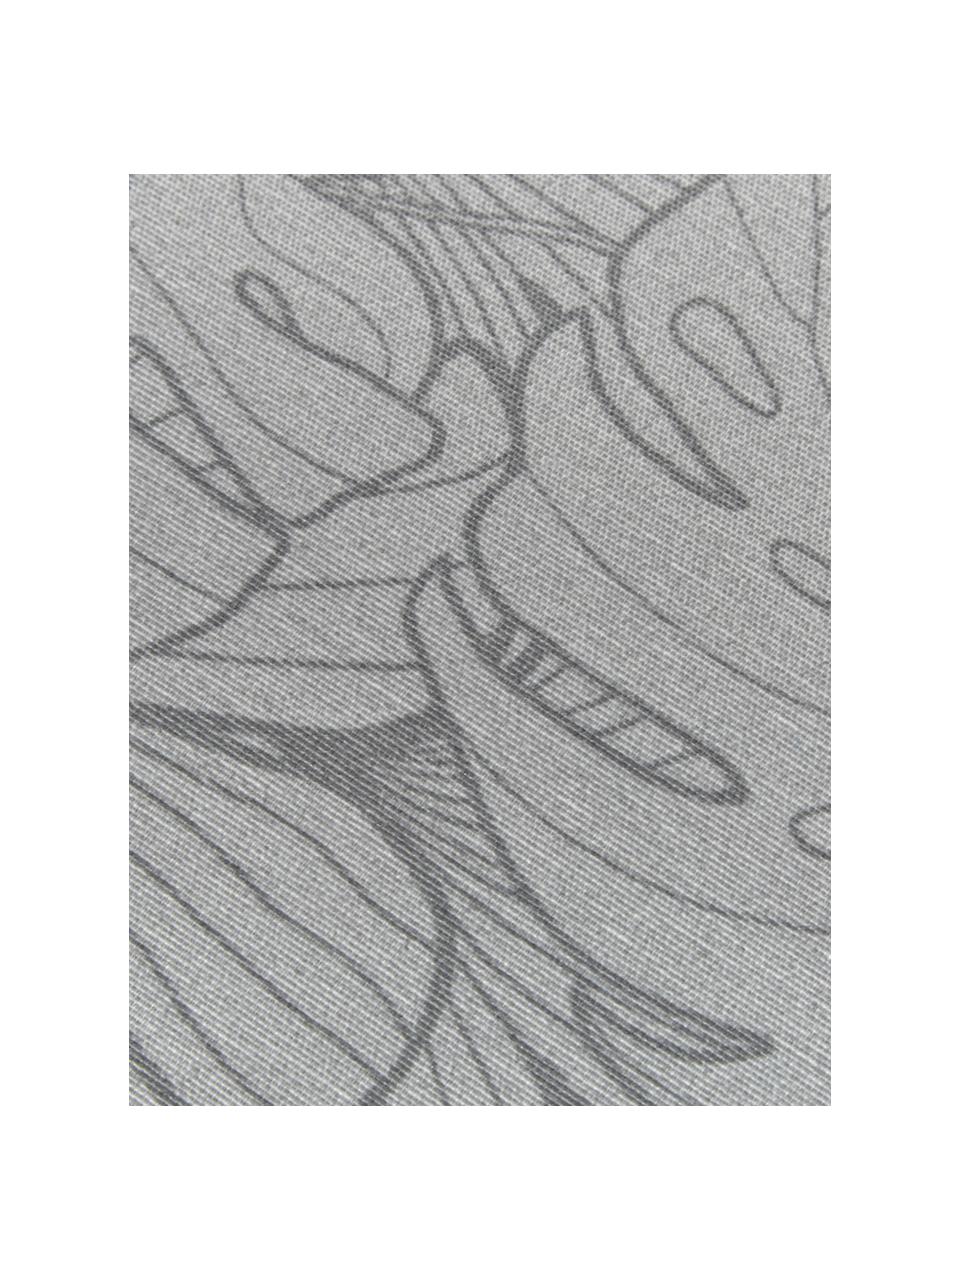 Sitzkissen Palm in Grau mit Palmenprint, 50% Baumwolle, 45% Polyester,
5% andere Fasern, Grau, 45 x 45 cm